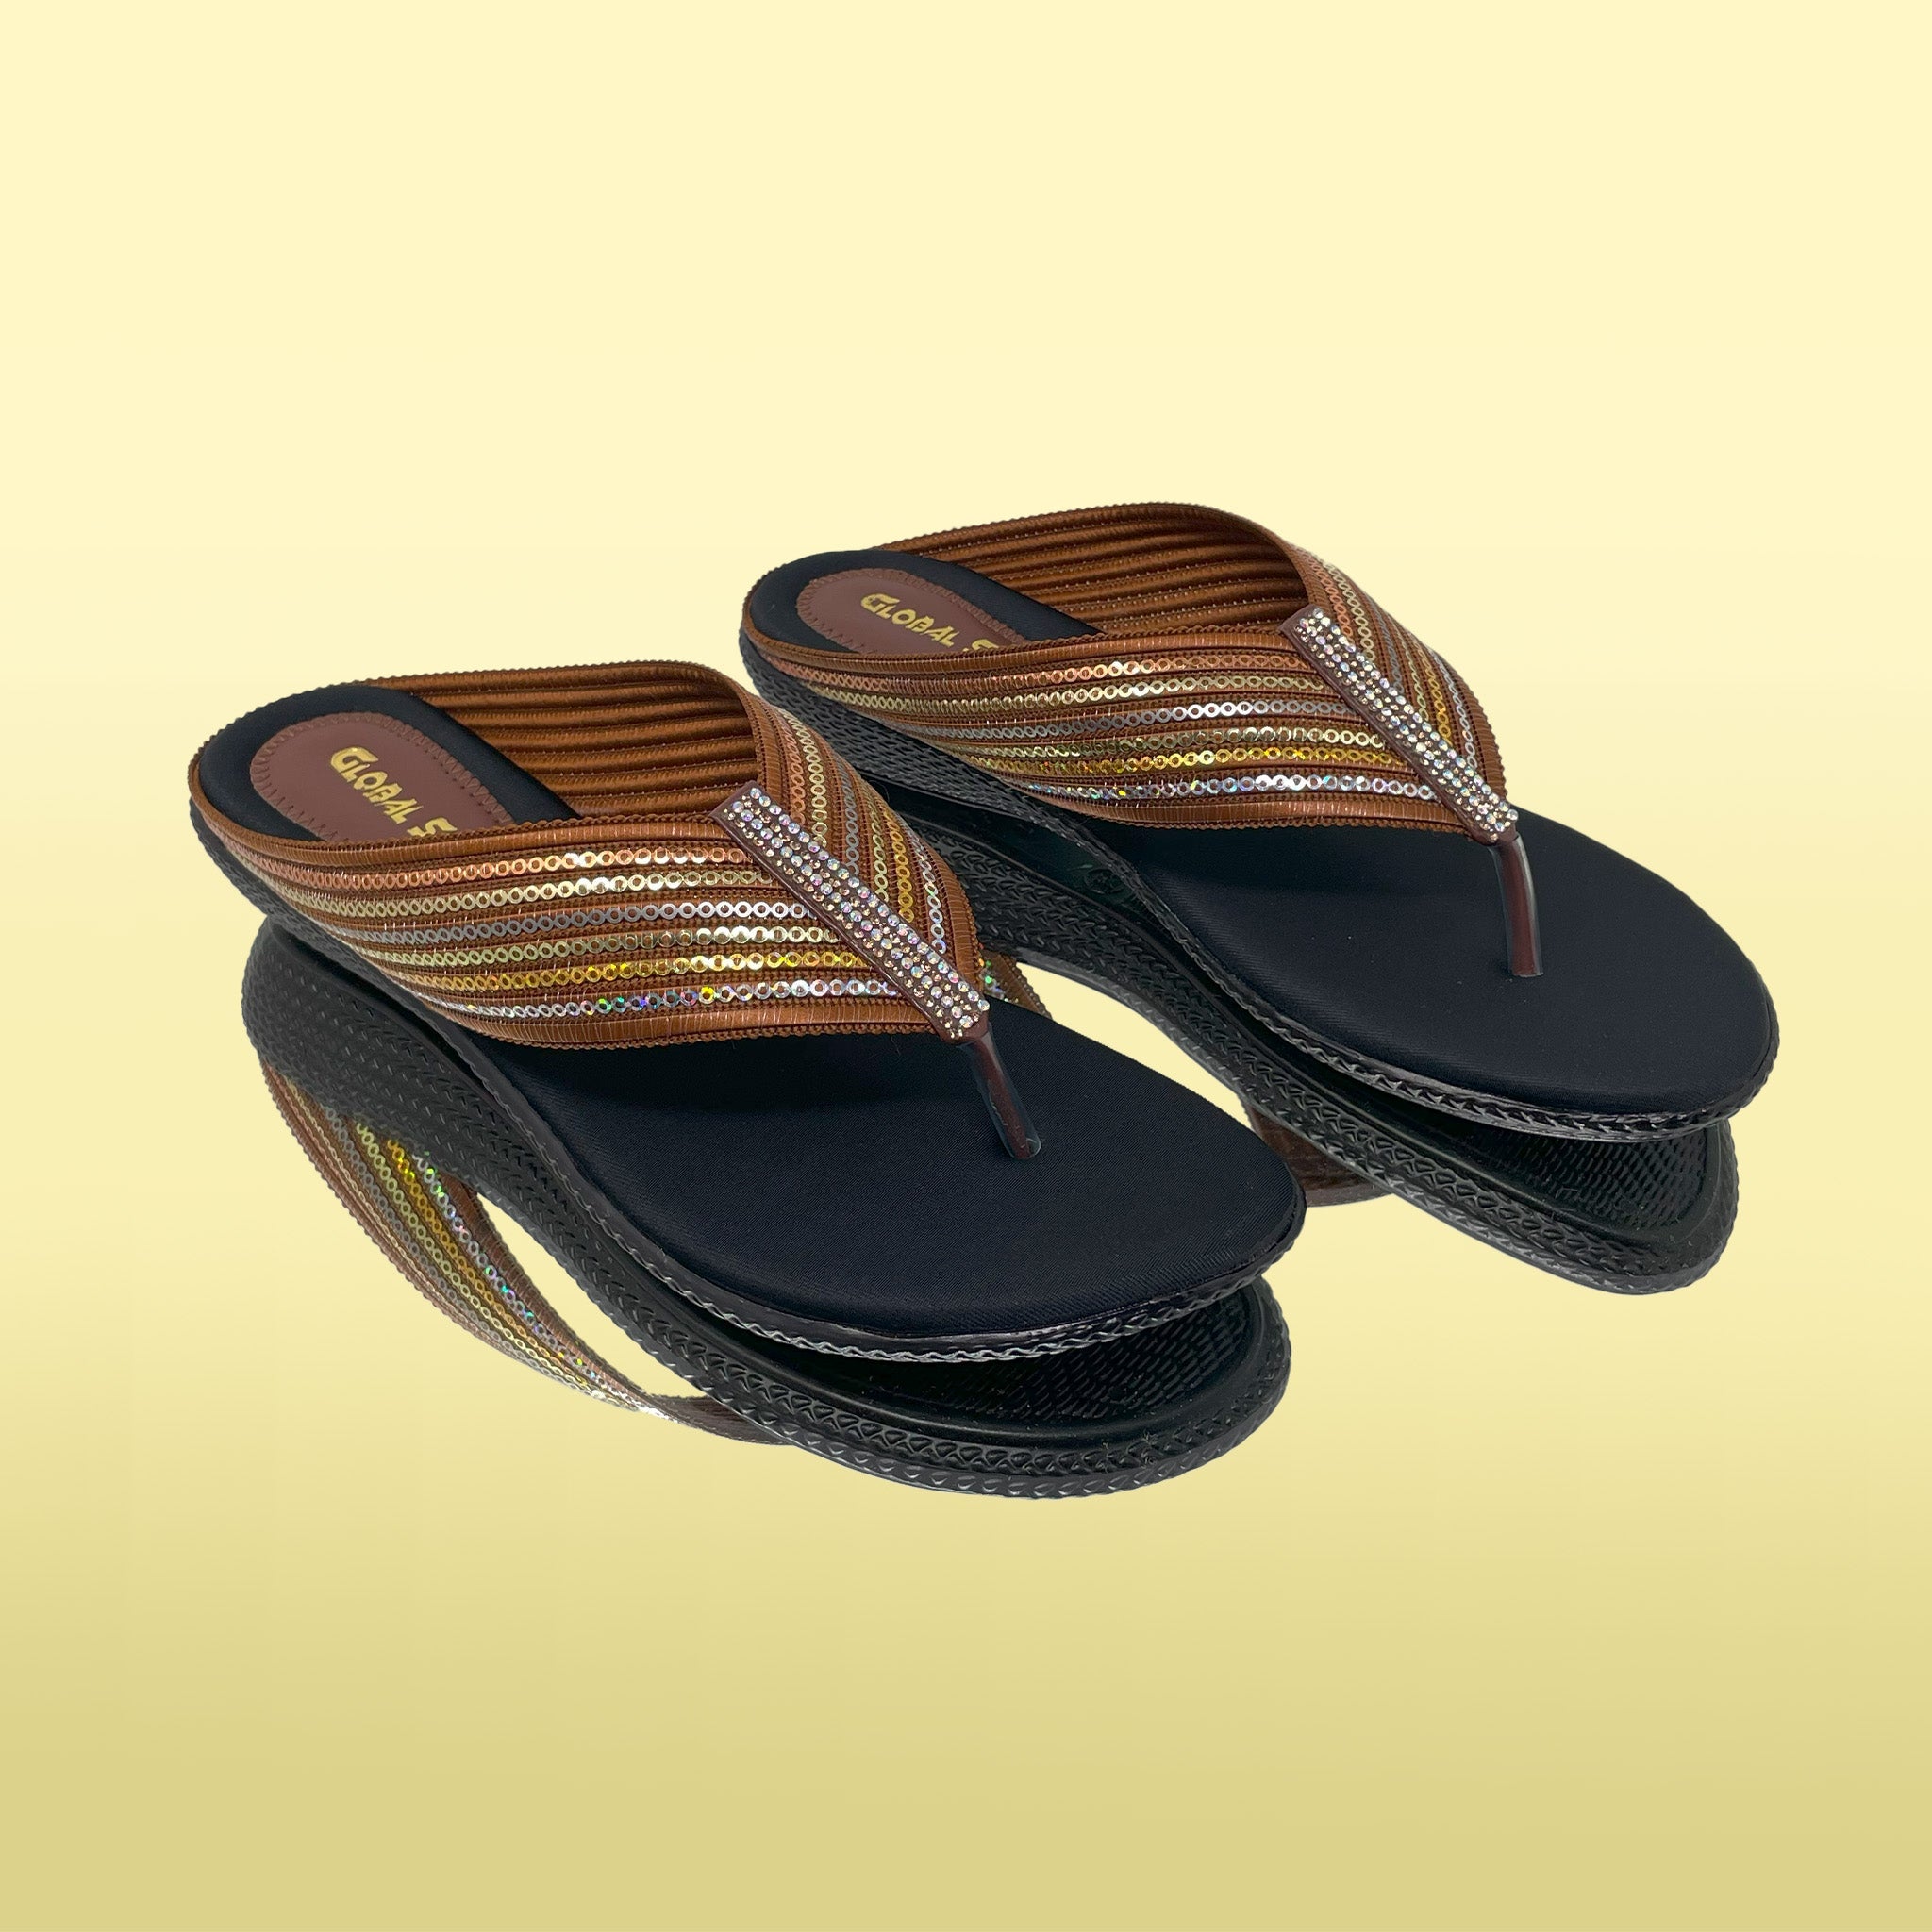 Tan Embroidery flat heels - GlobalStep - Flats